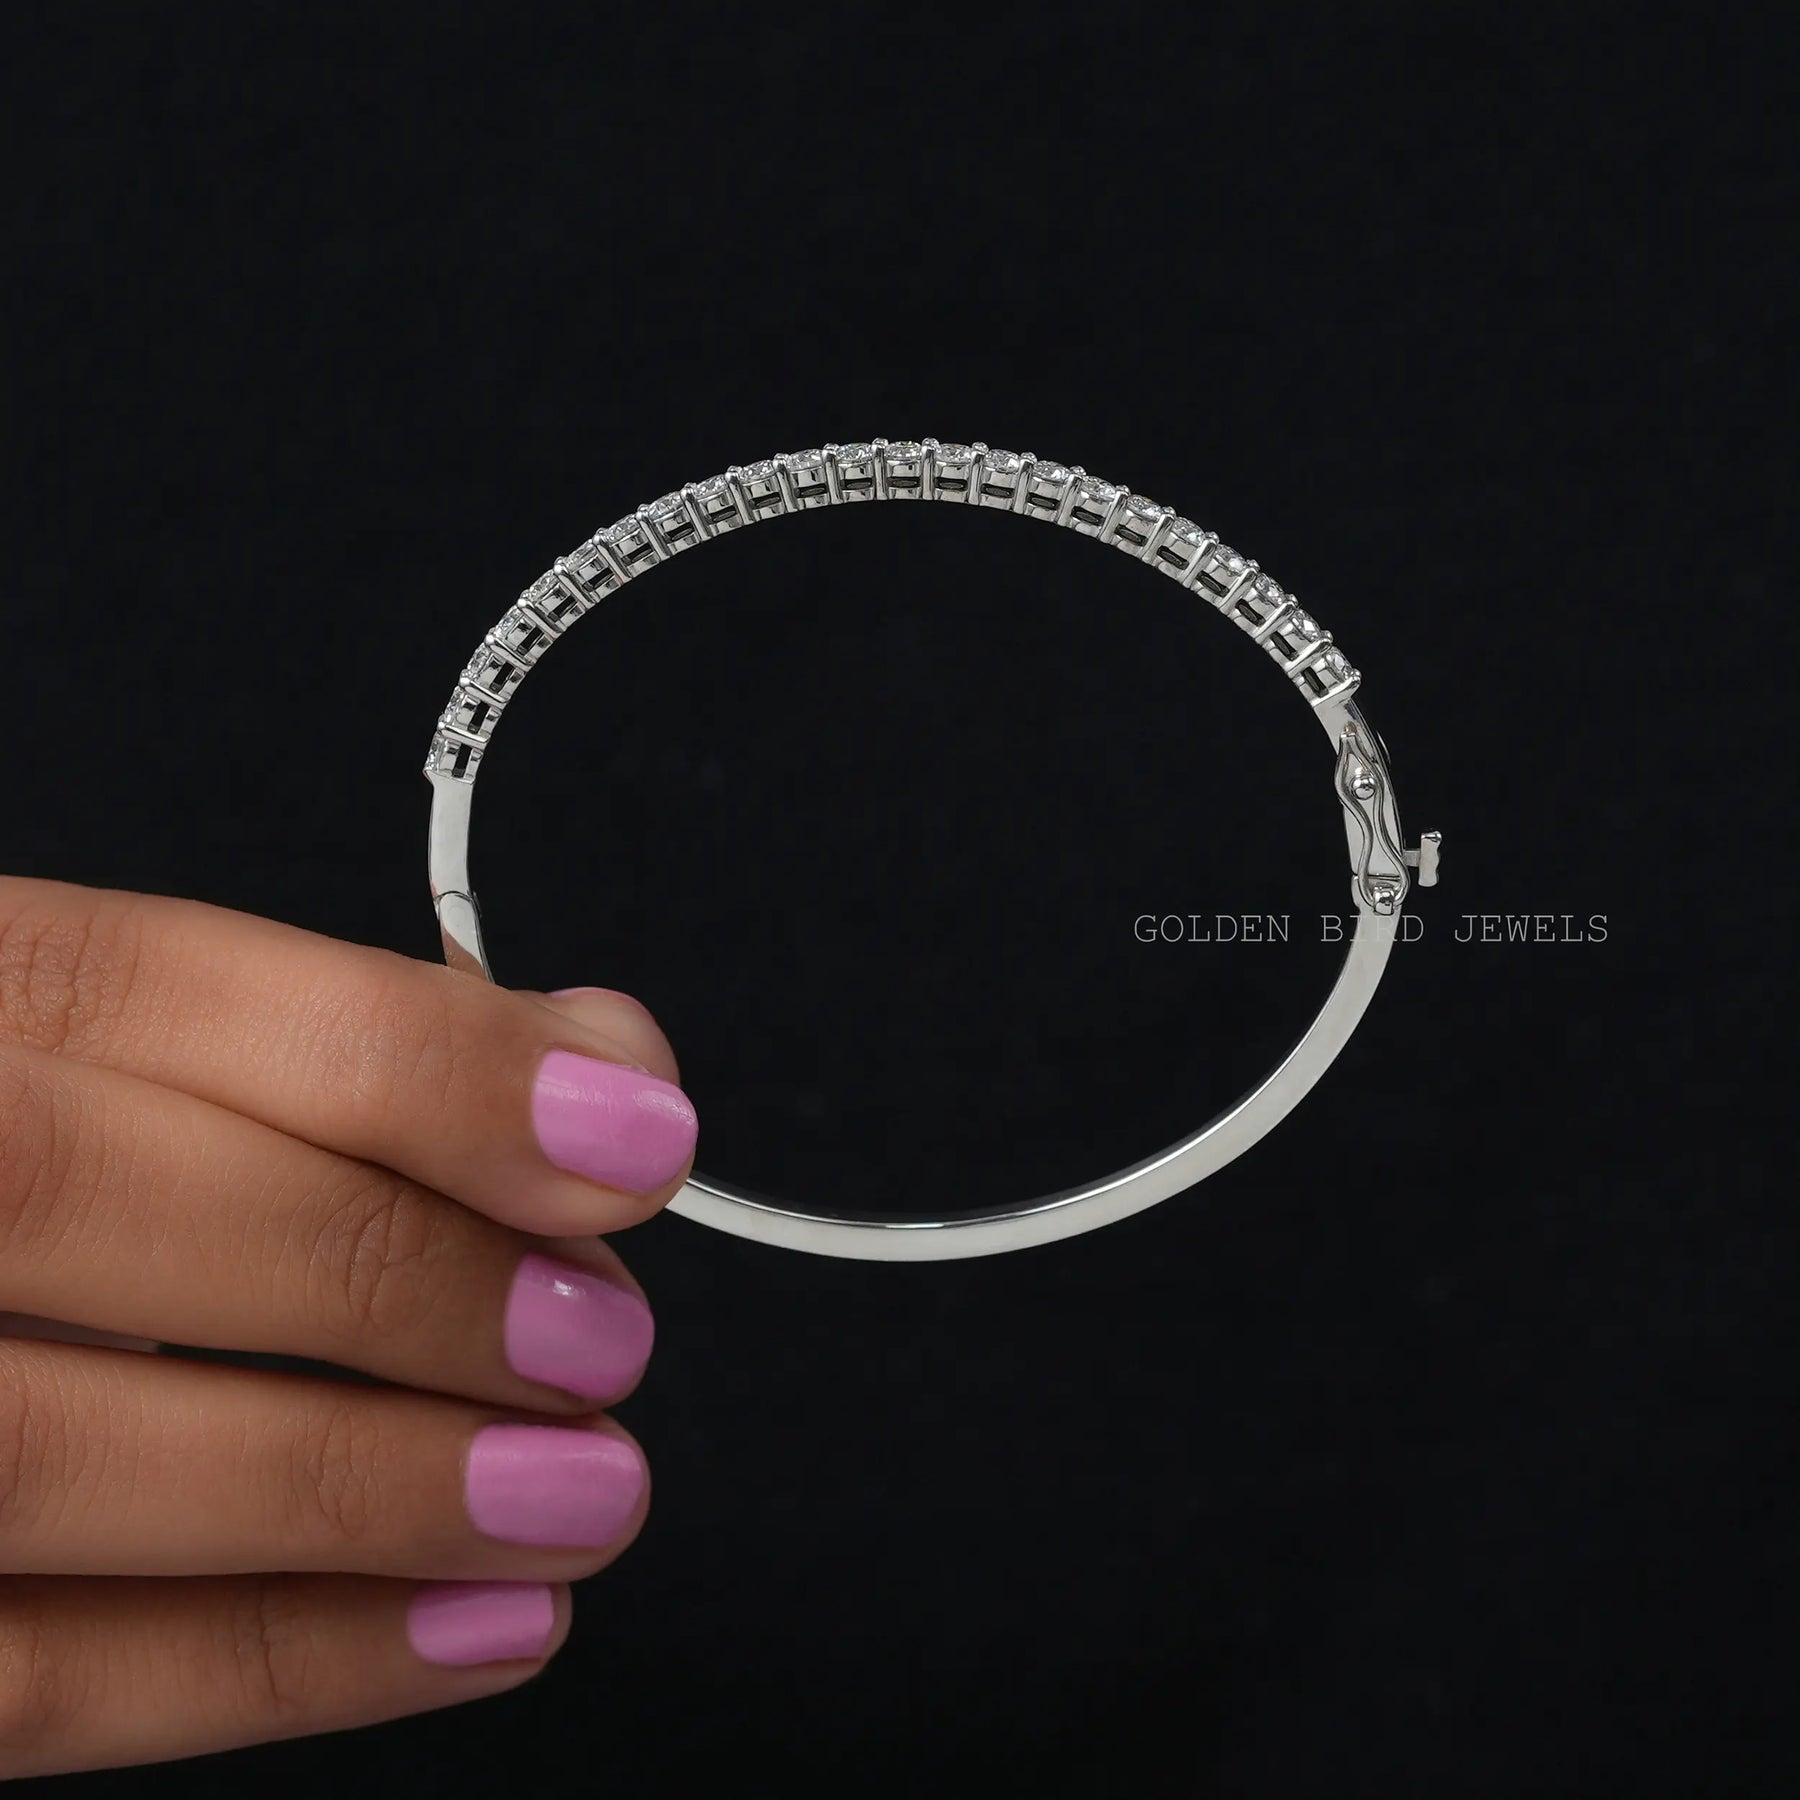 [This round cut moissanite bracelet craftedn with white gold]-[Golden Bird Jewels]